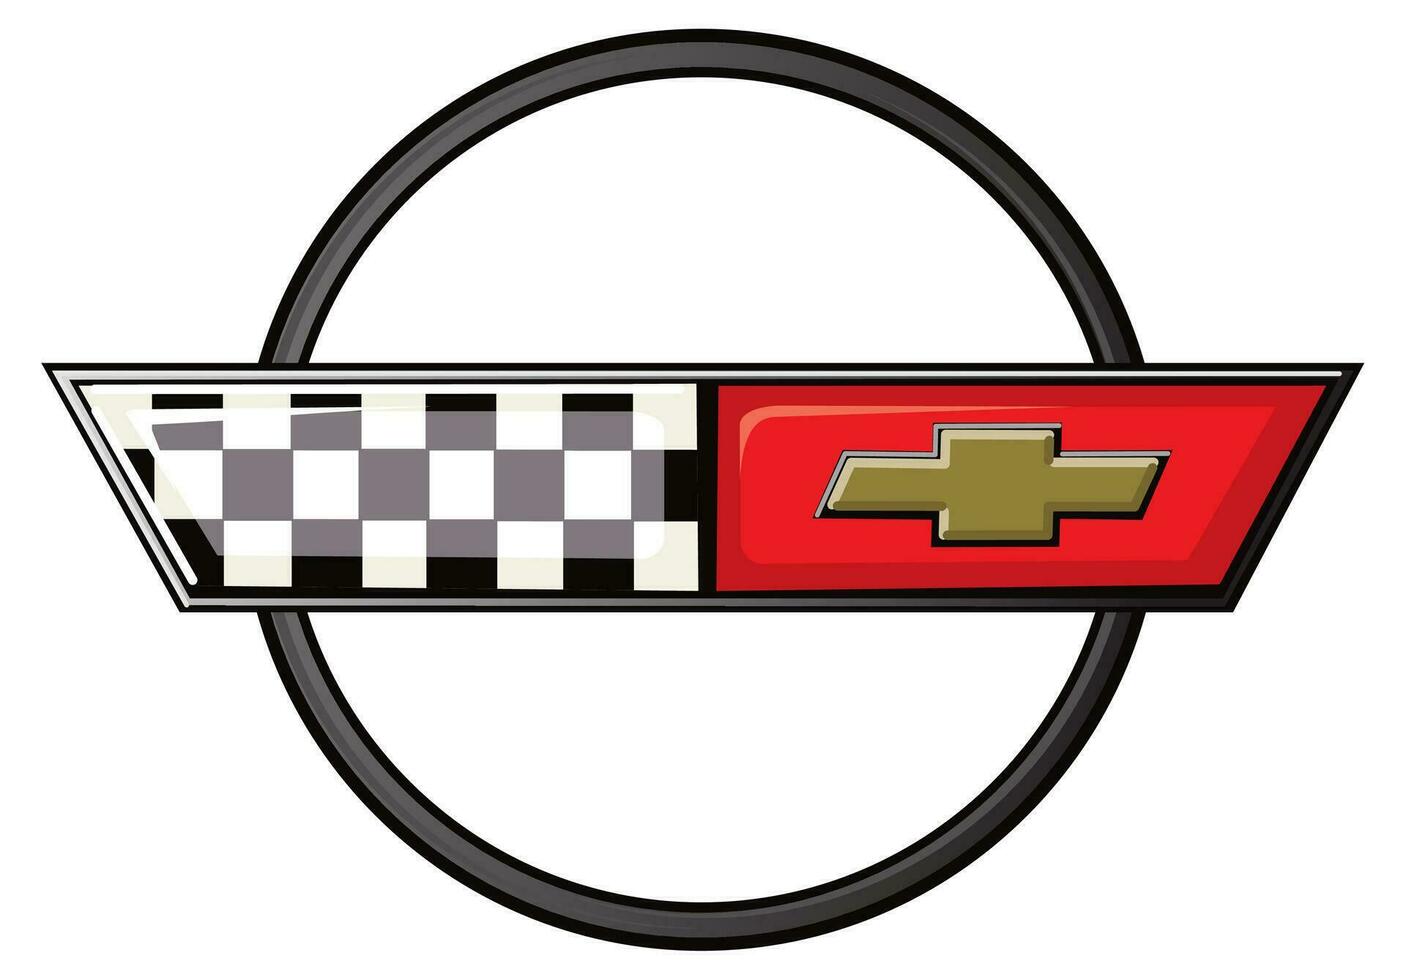 1984 - 1996 Chevrolet korvett bil logotyp vektor